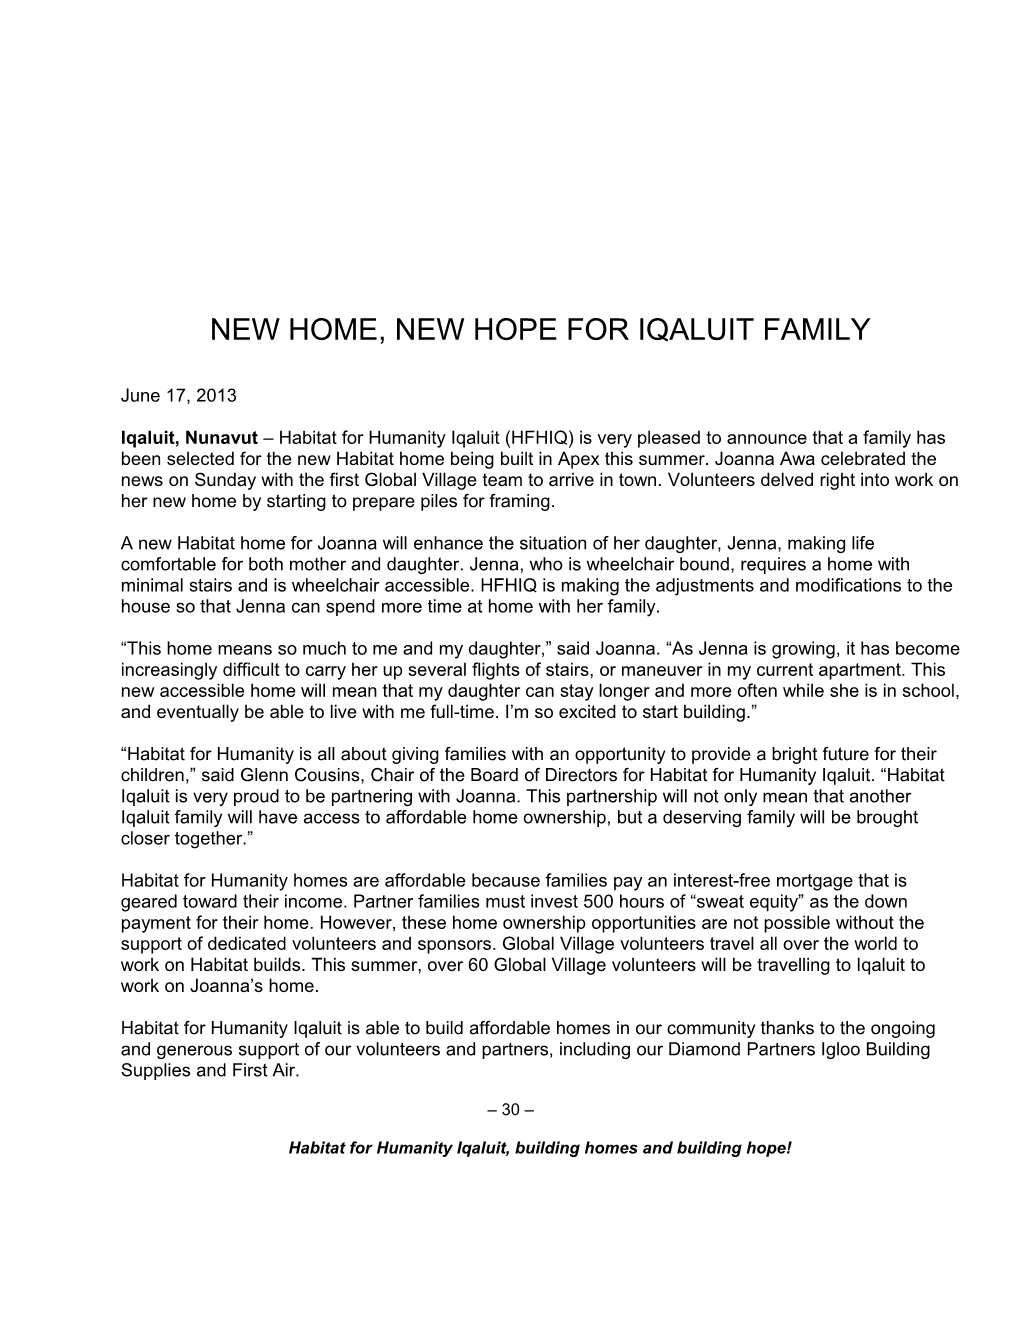 New Home, New Hope for Iqaluit Family